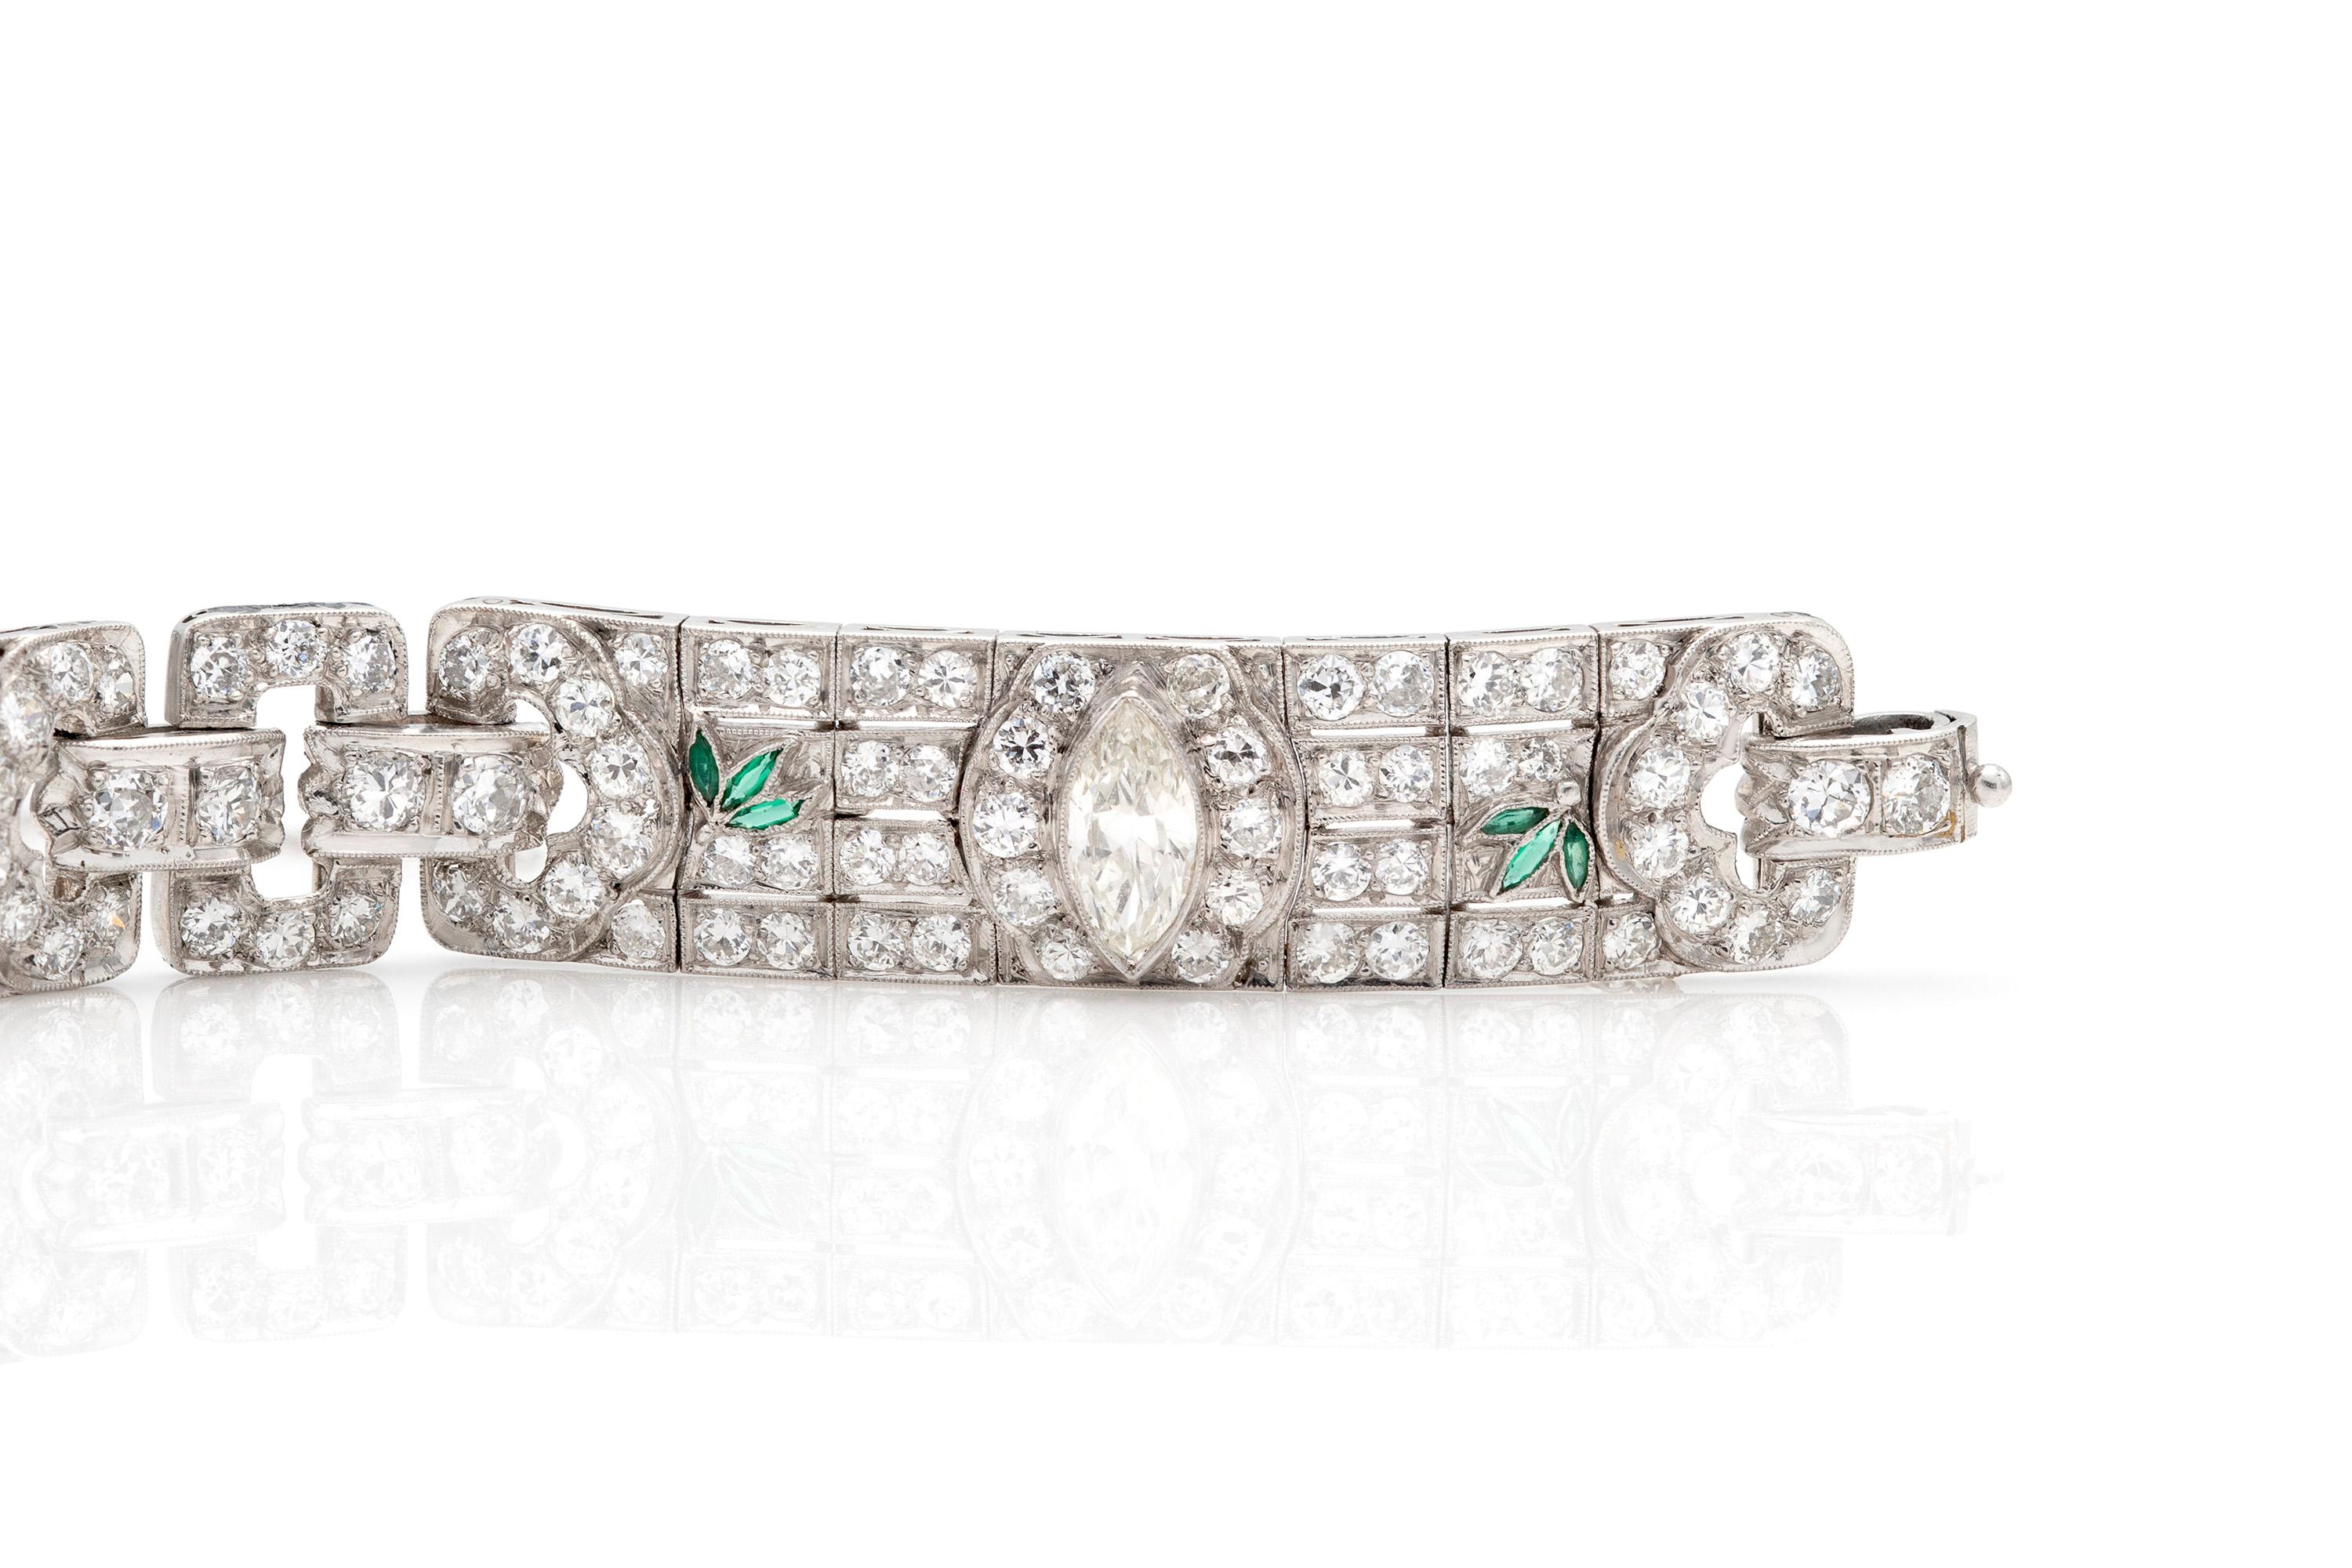 Marquise Cut Art Deco Diamond Bracelet with Emerald For Sale